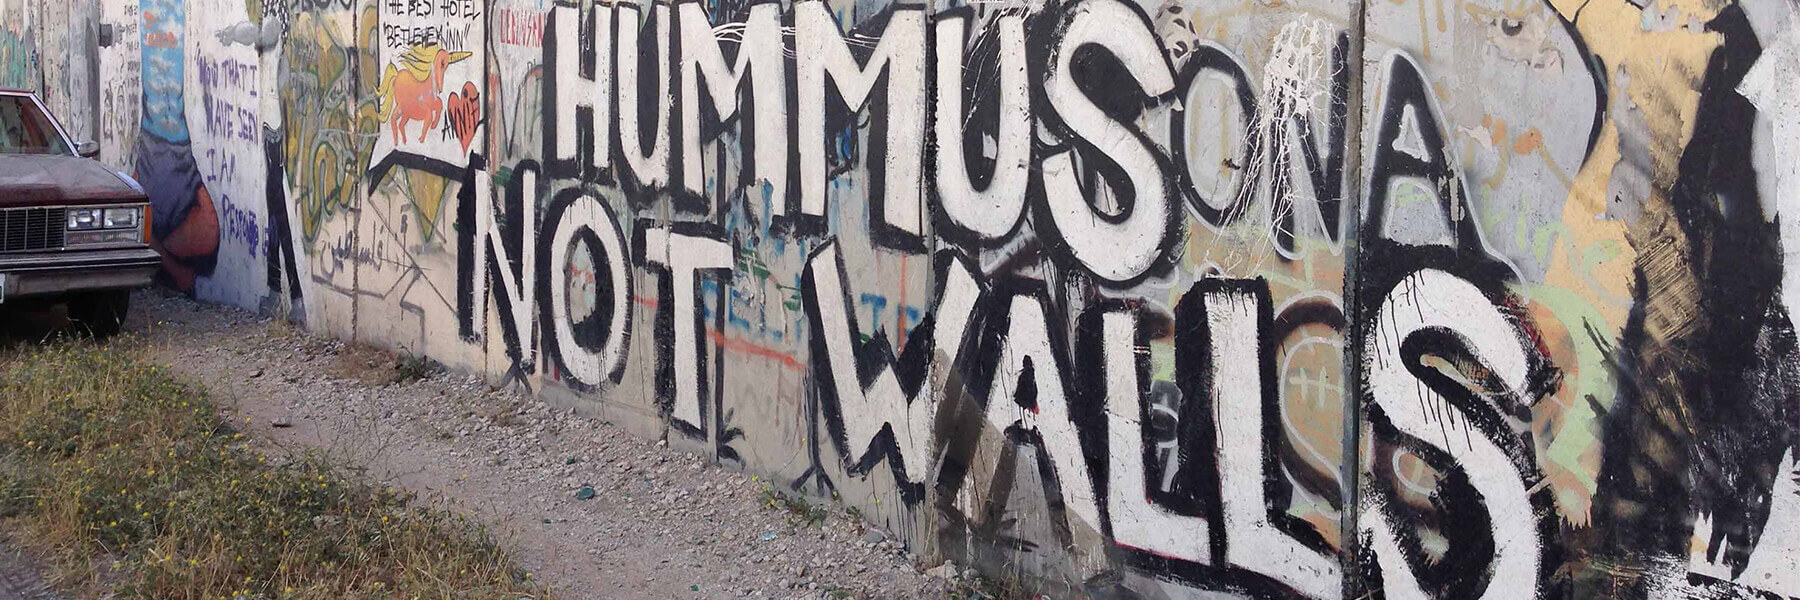 Graffiti on a wall that reads Make Hummus Not Walls